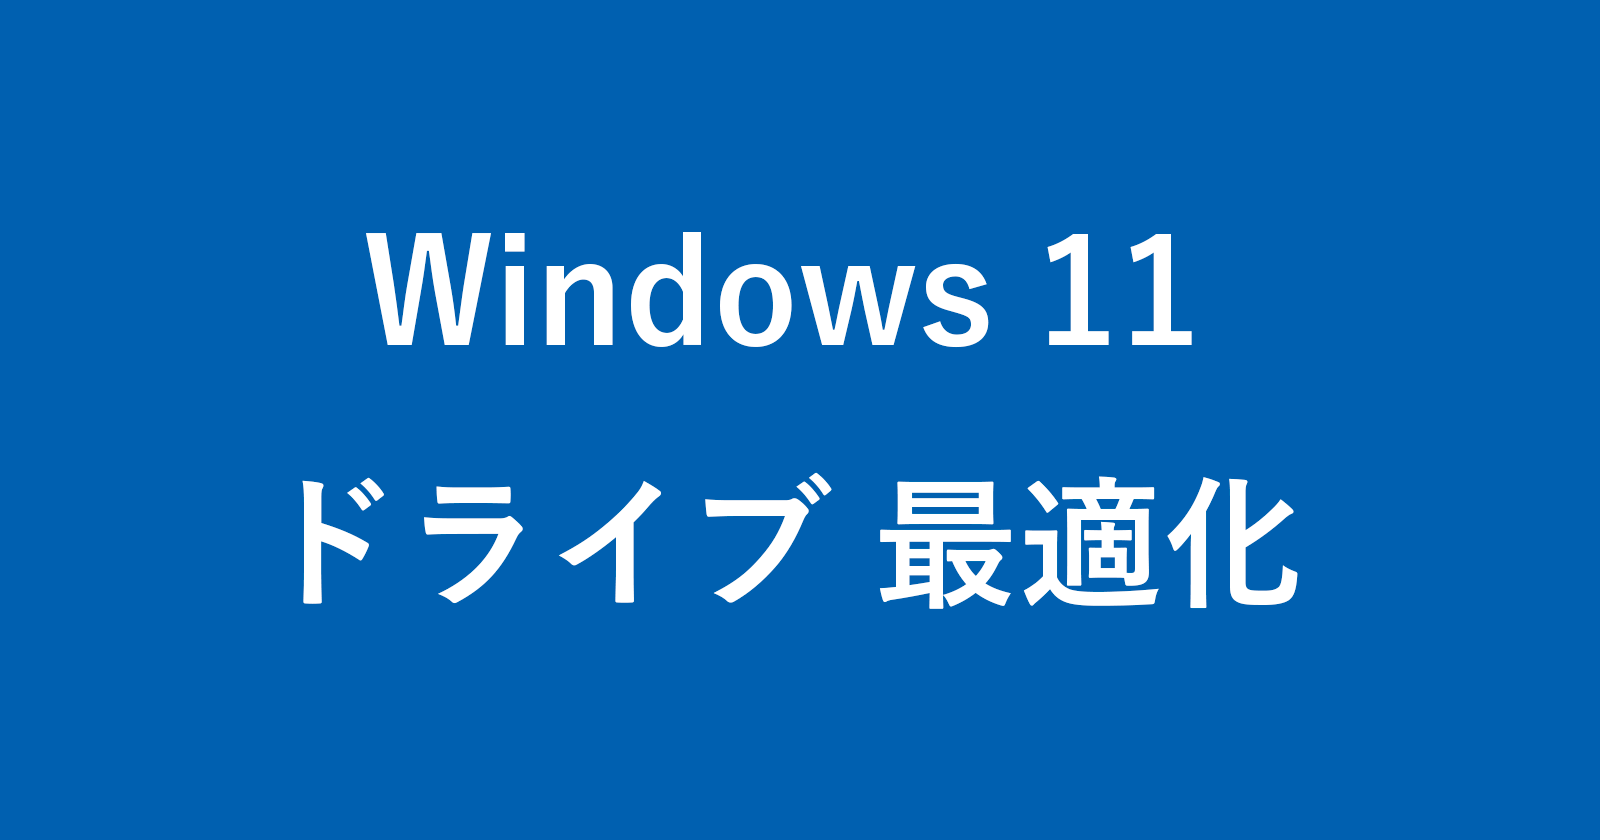 windows 11 dfrag